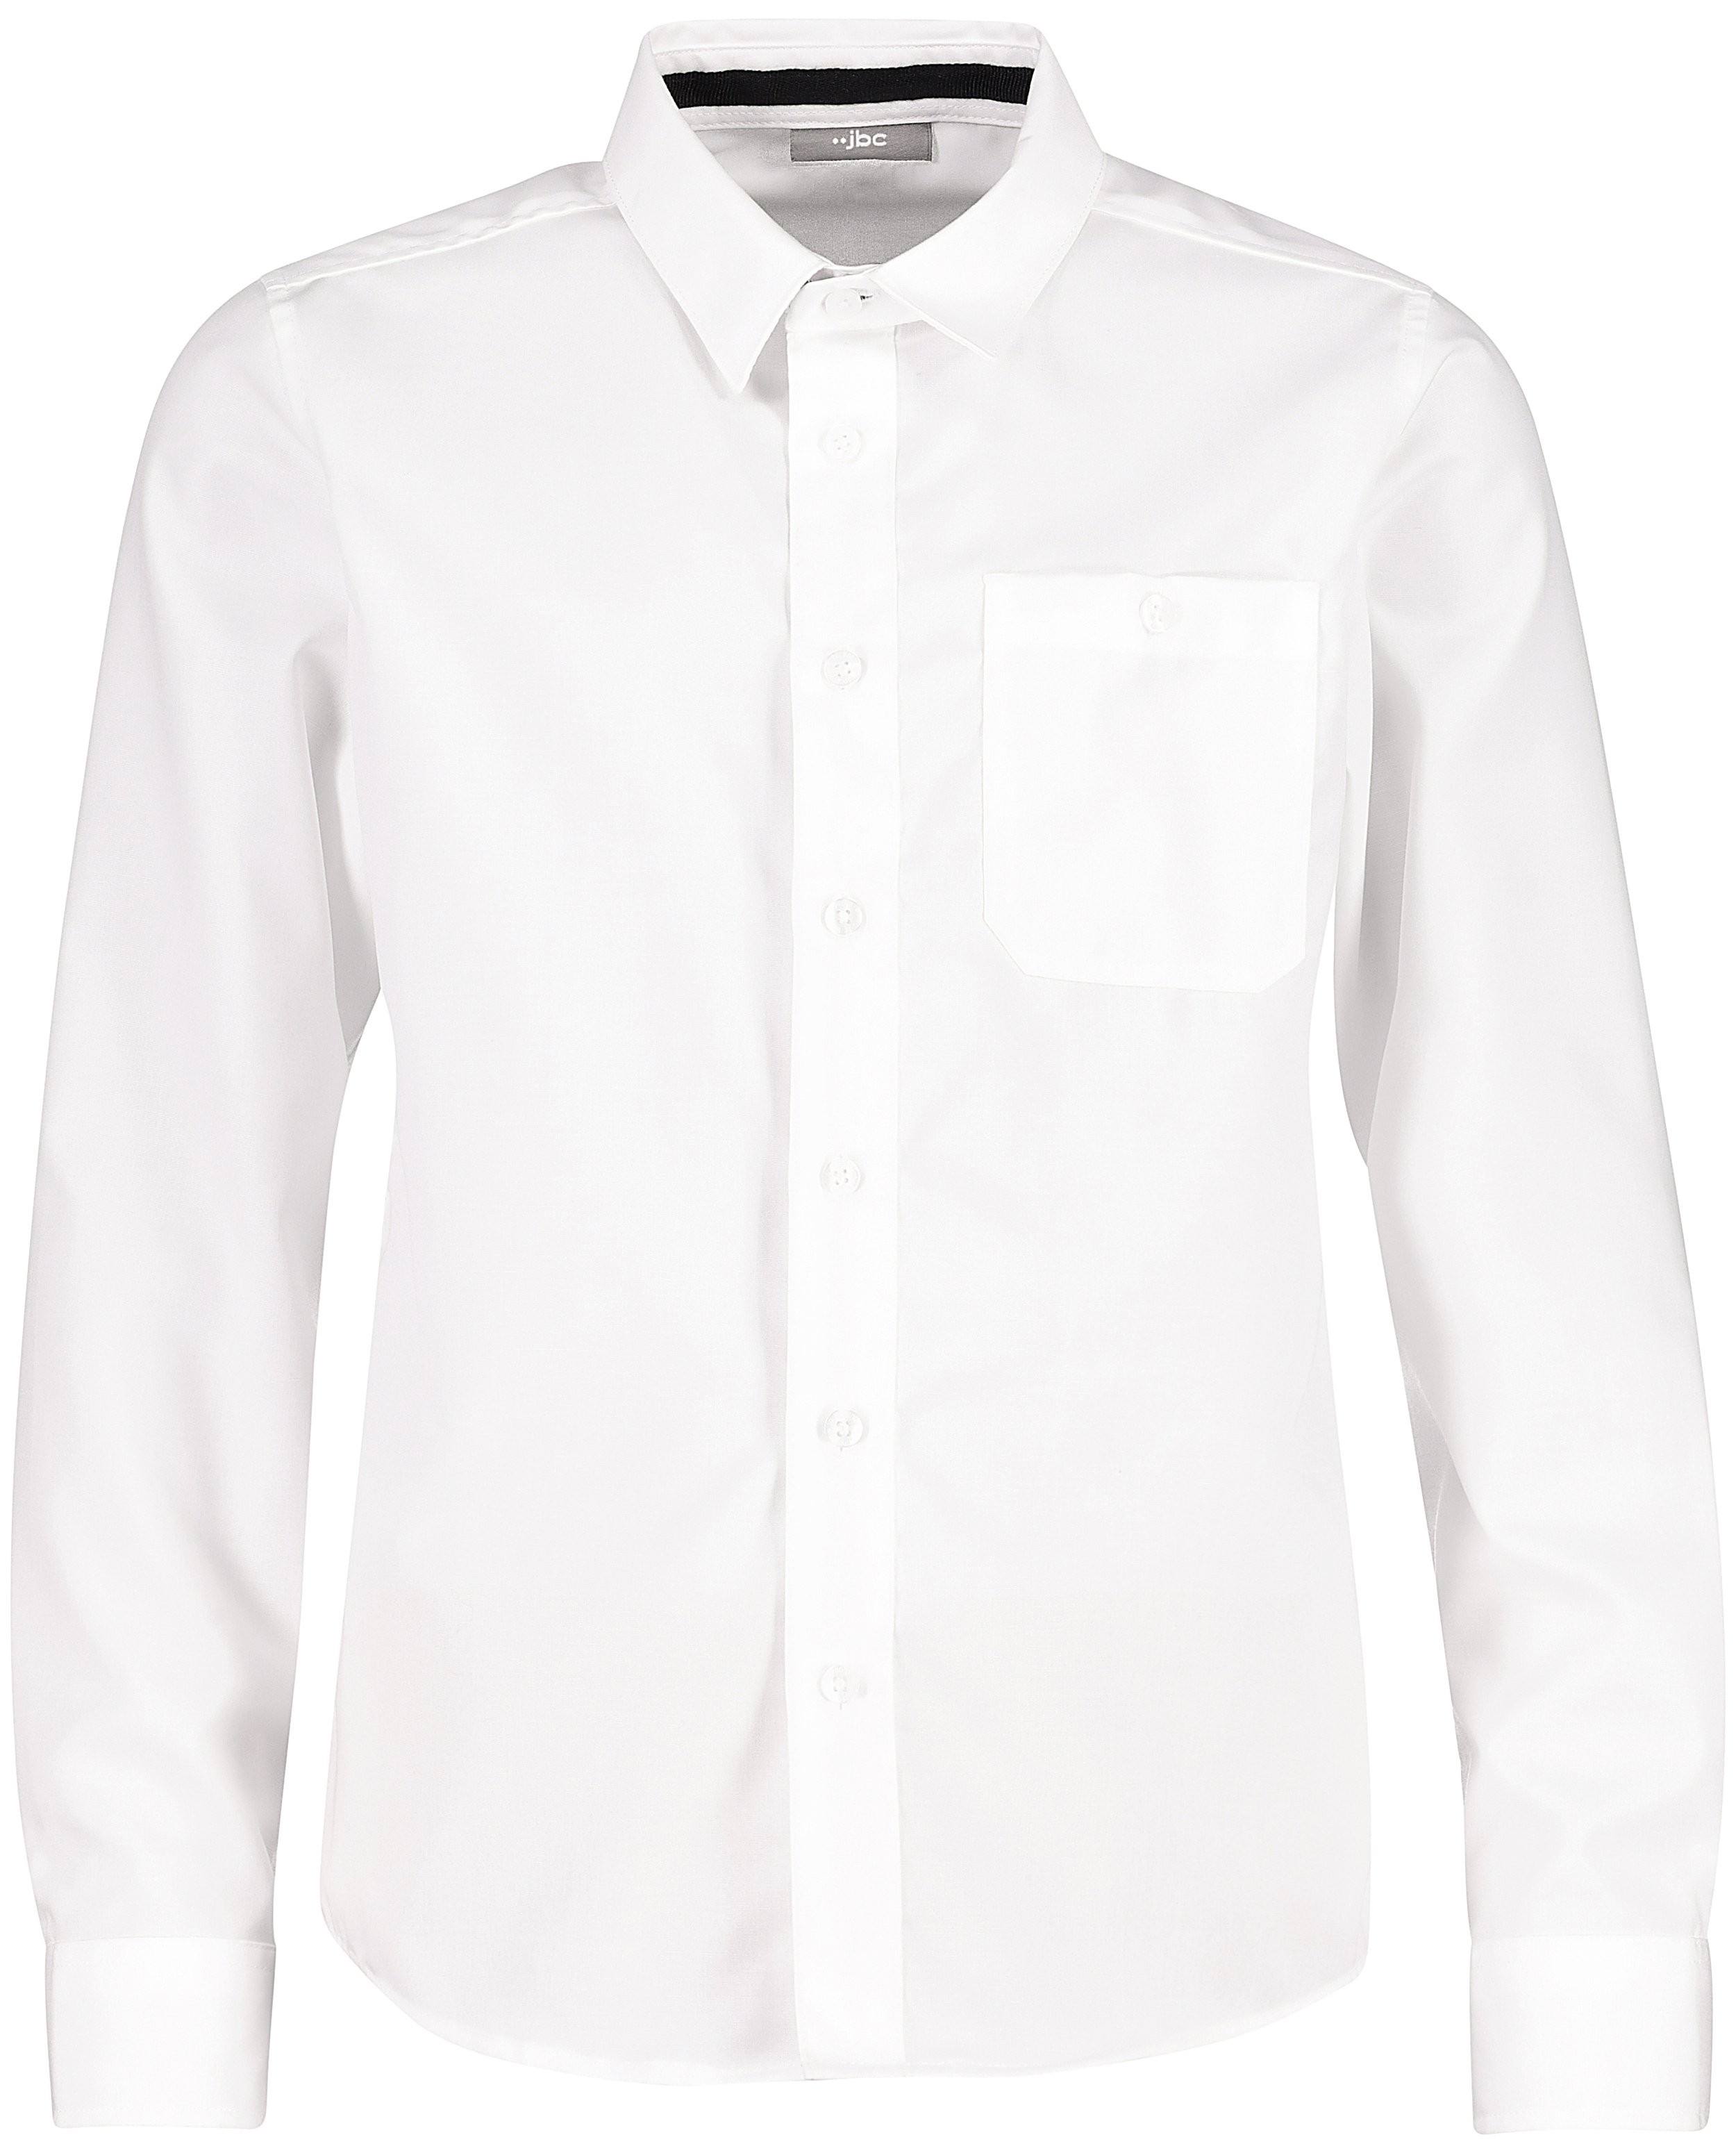 Hemden - Roomwit hemd